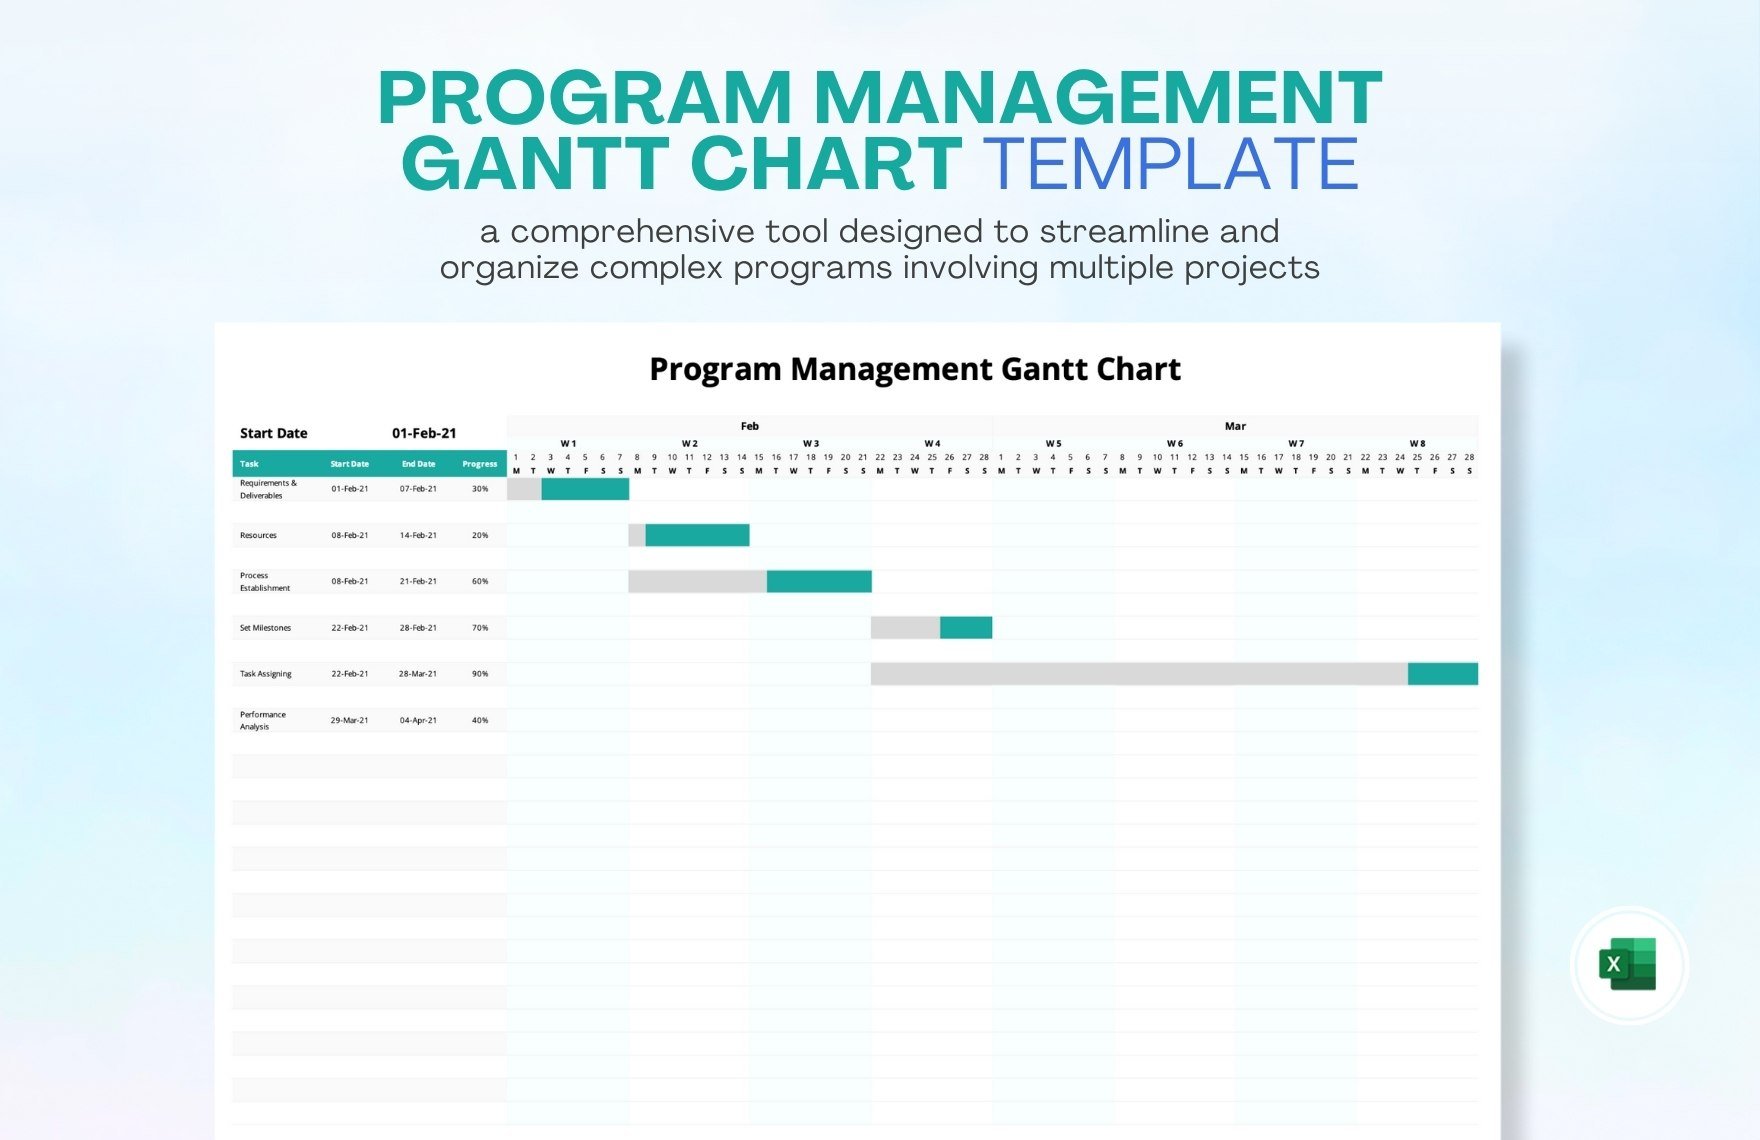 Program Management Gantt Chart Template in Excel